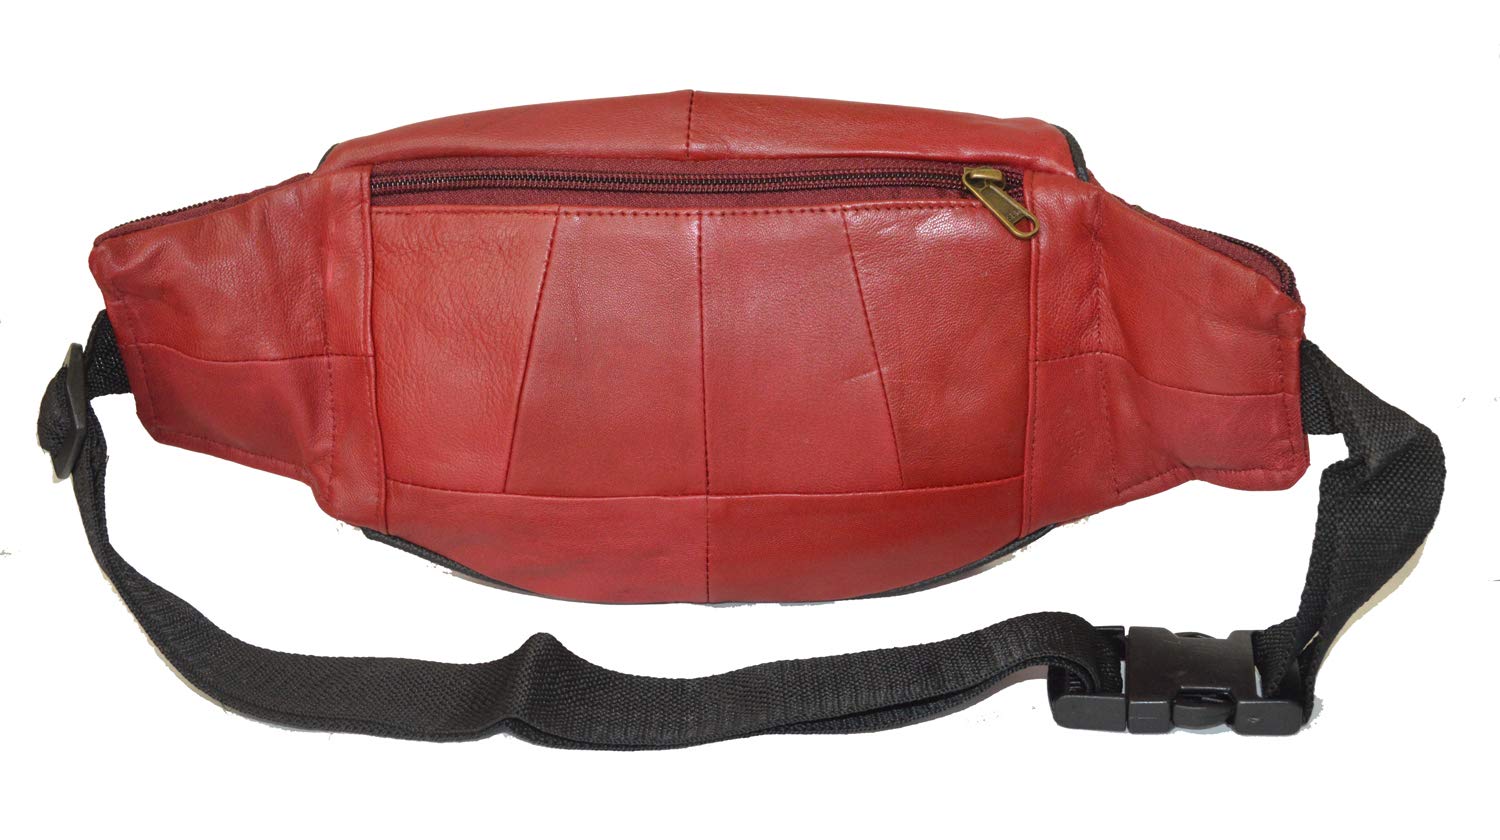 Leatherboss Genuine Leather Travel Fanny Pack Waist Belt Bag Pouch for men women, Cherry